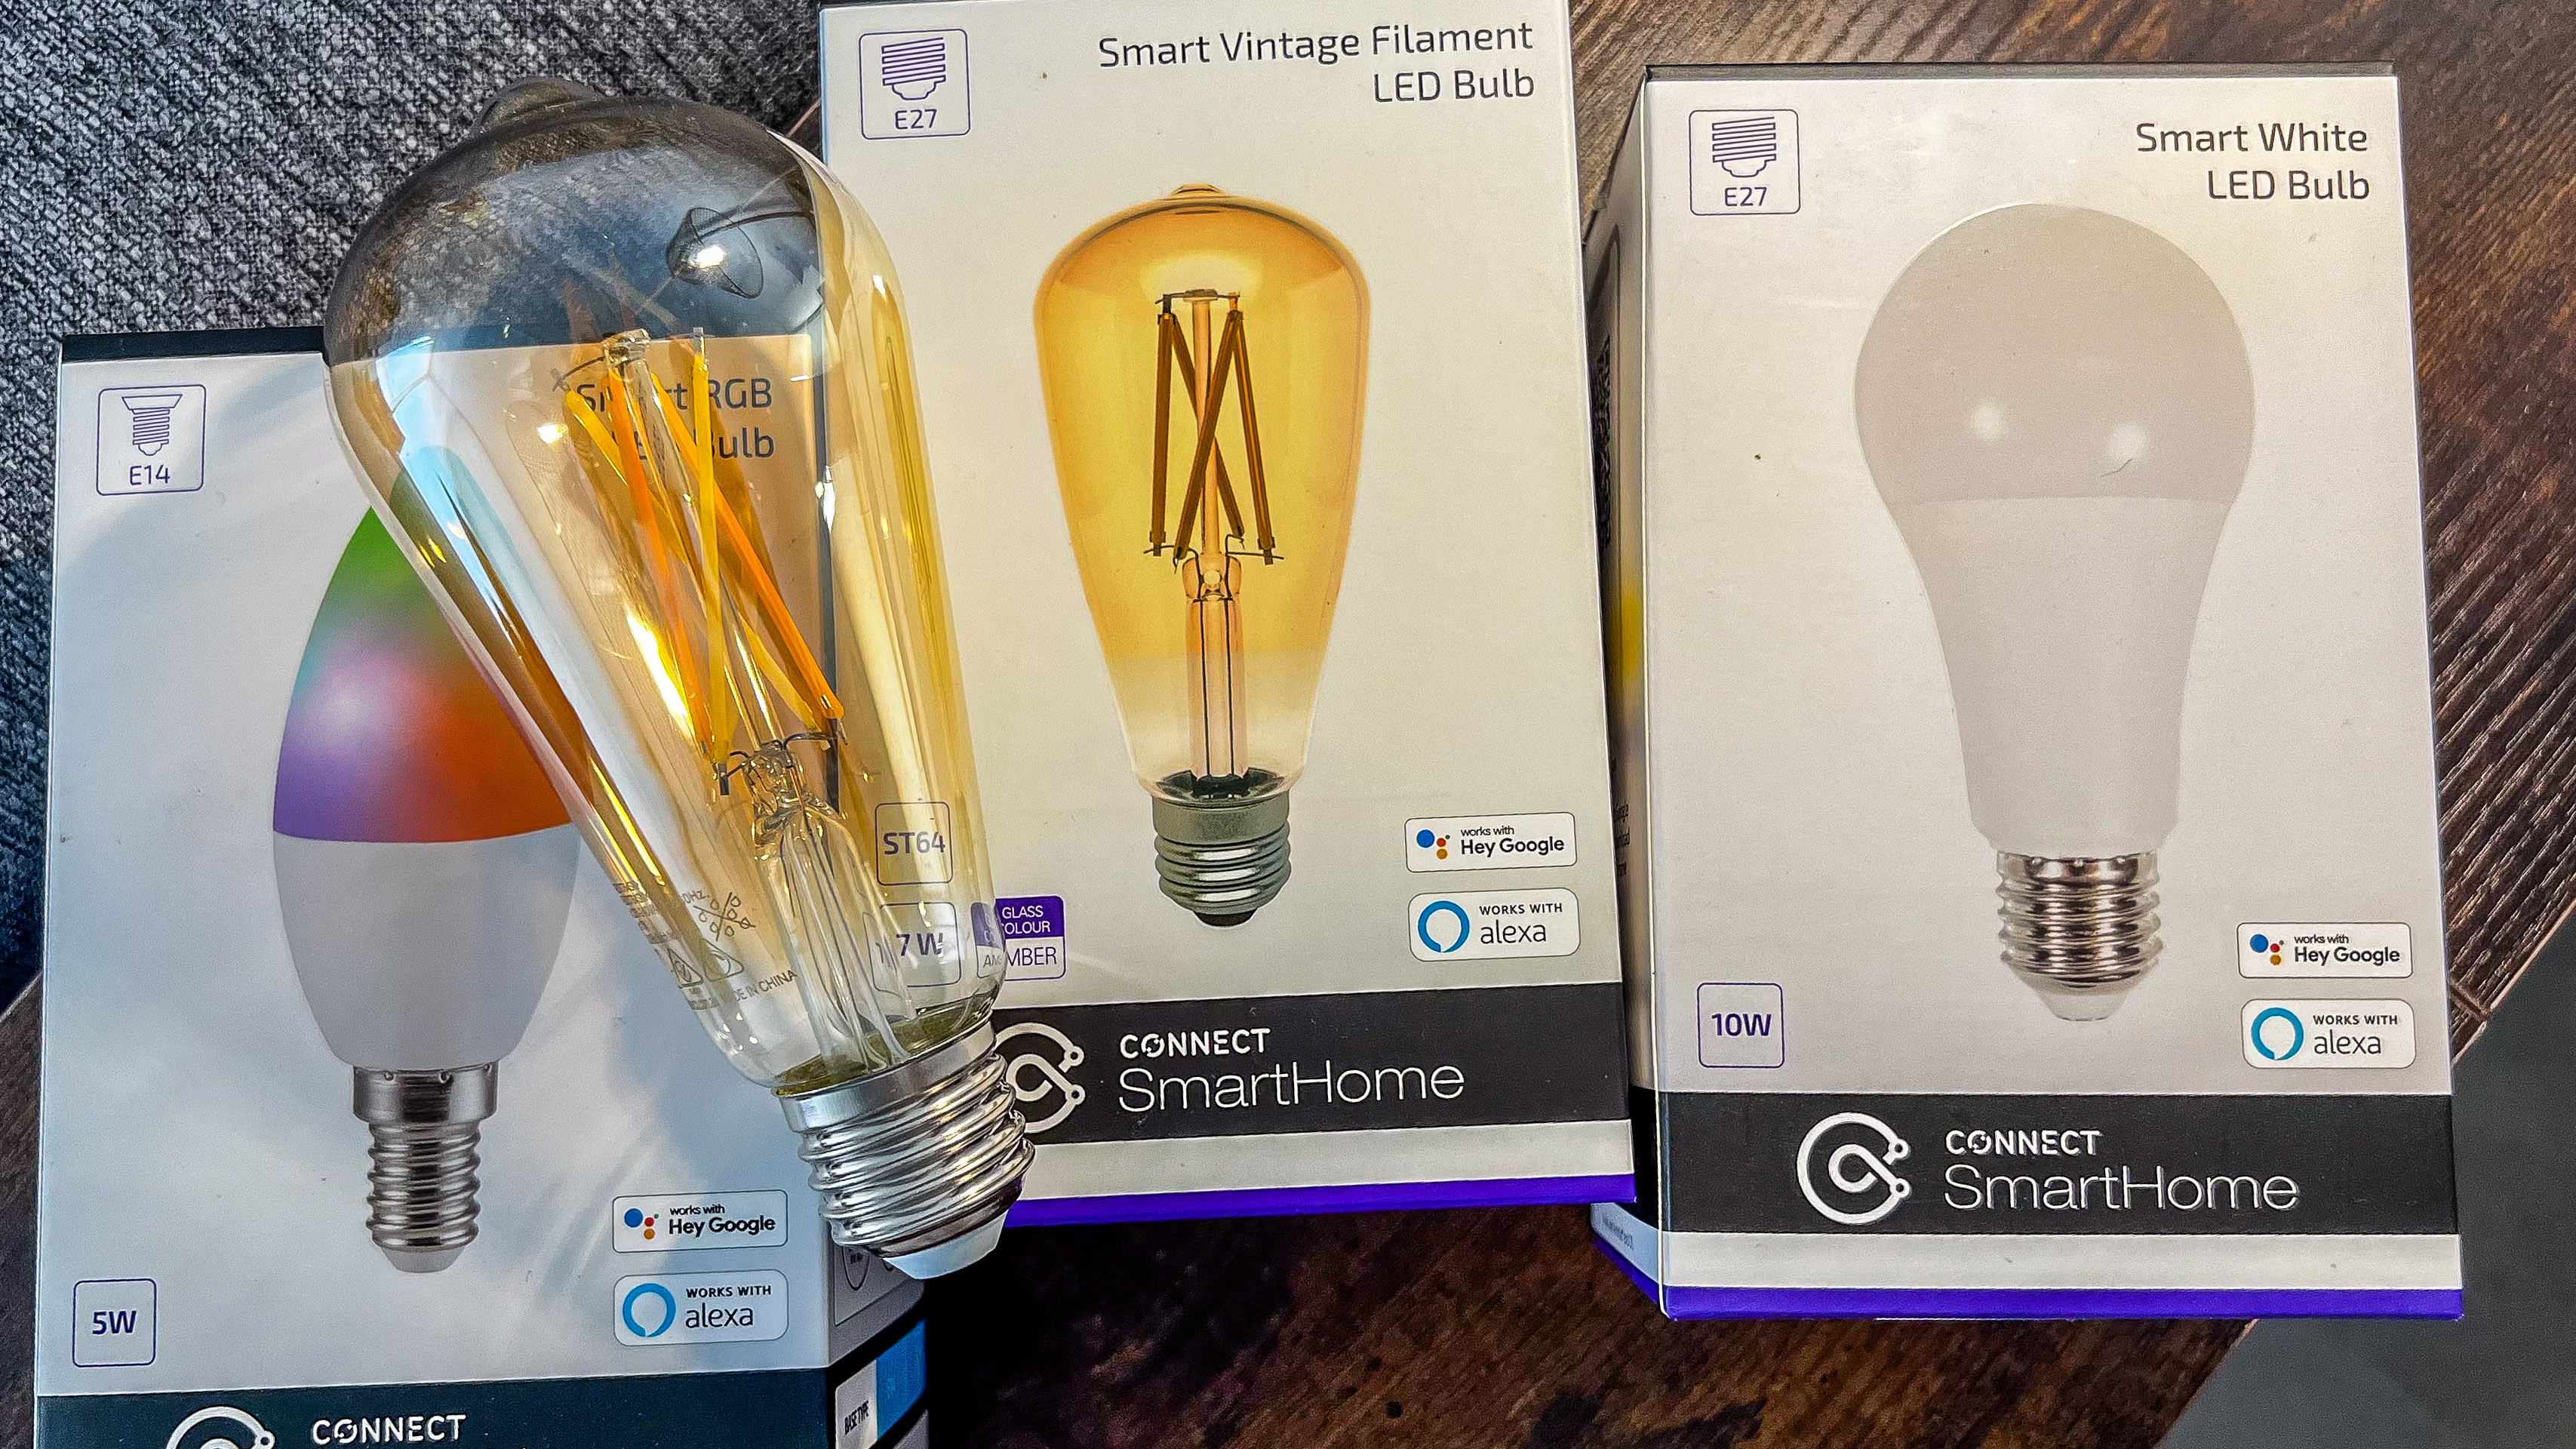 A range of Laser smart bulbs